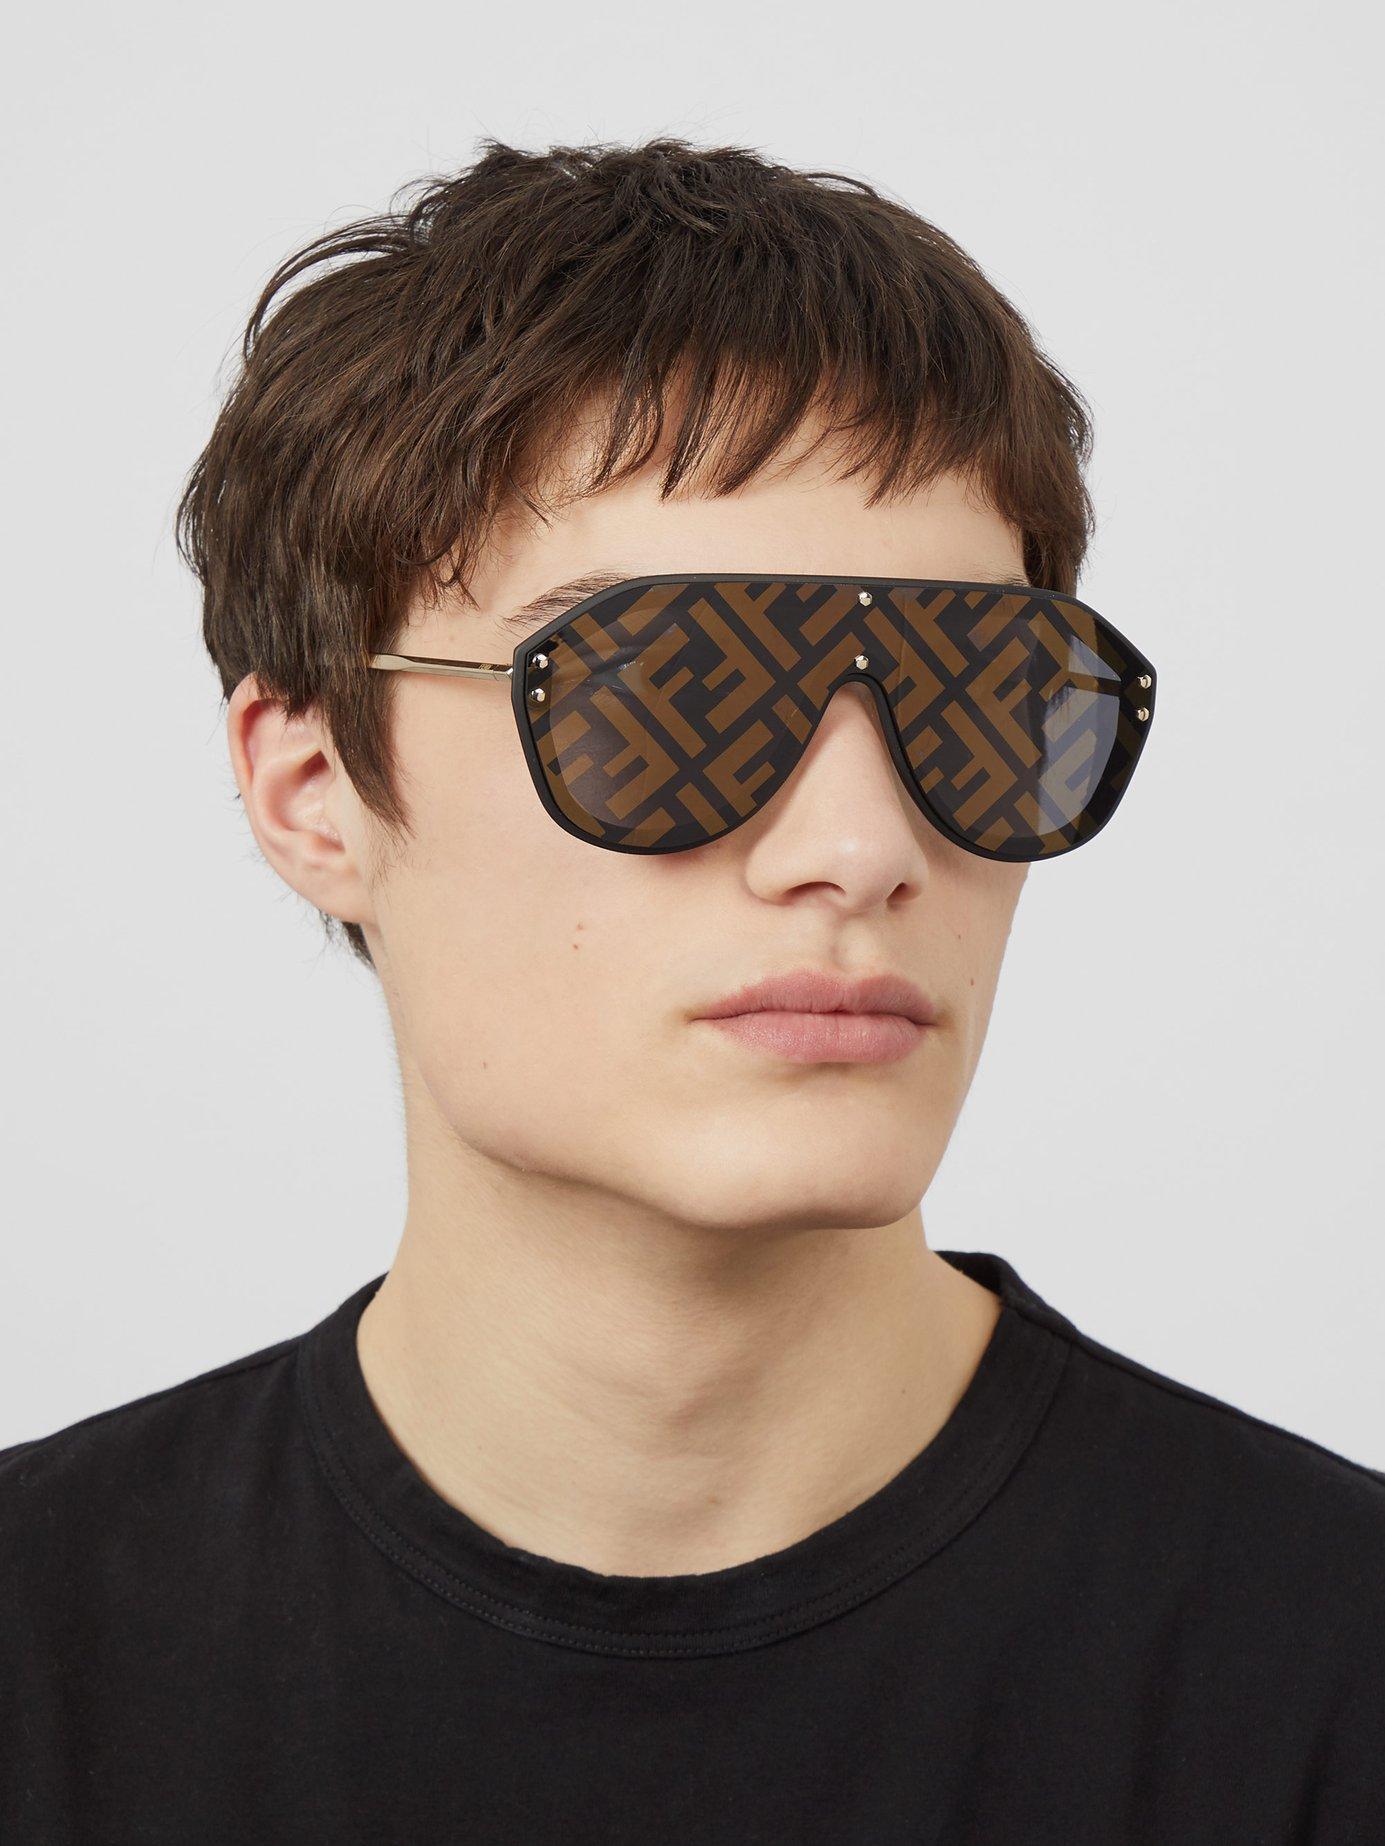 Fendi sunglasses with FF logo